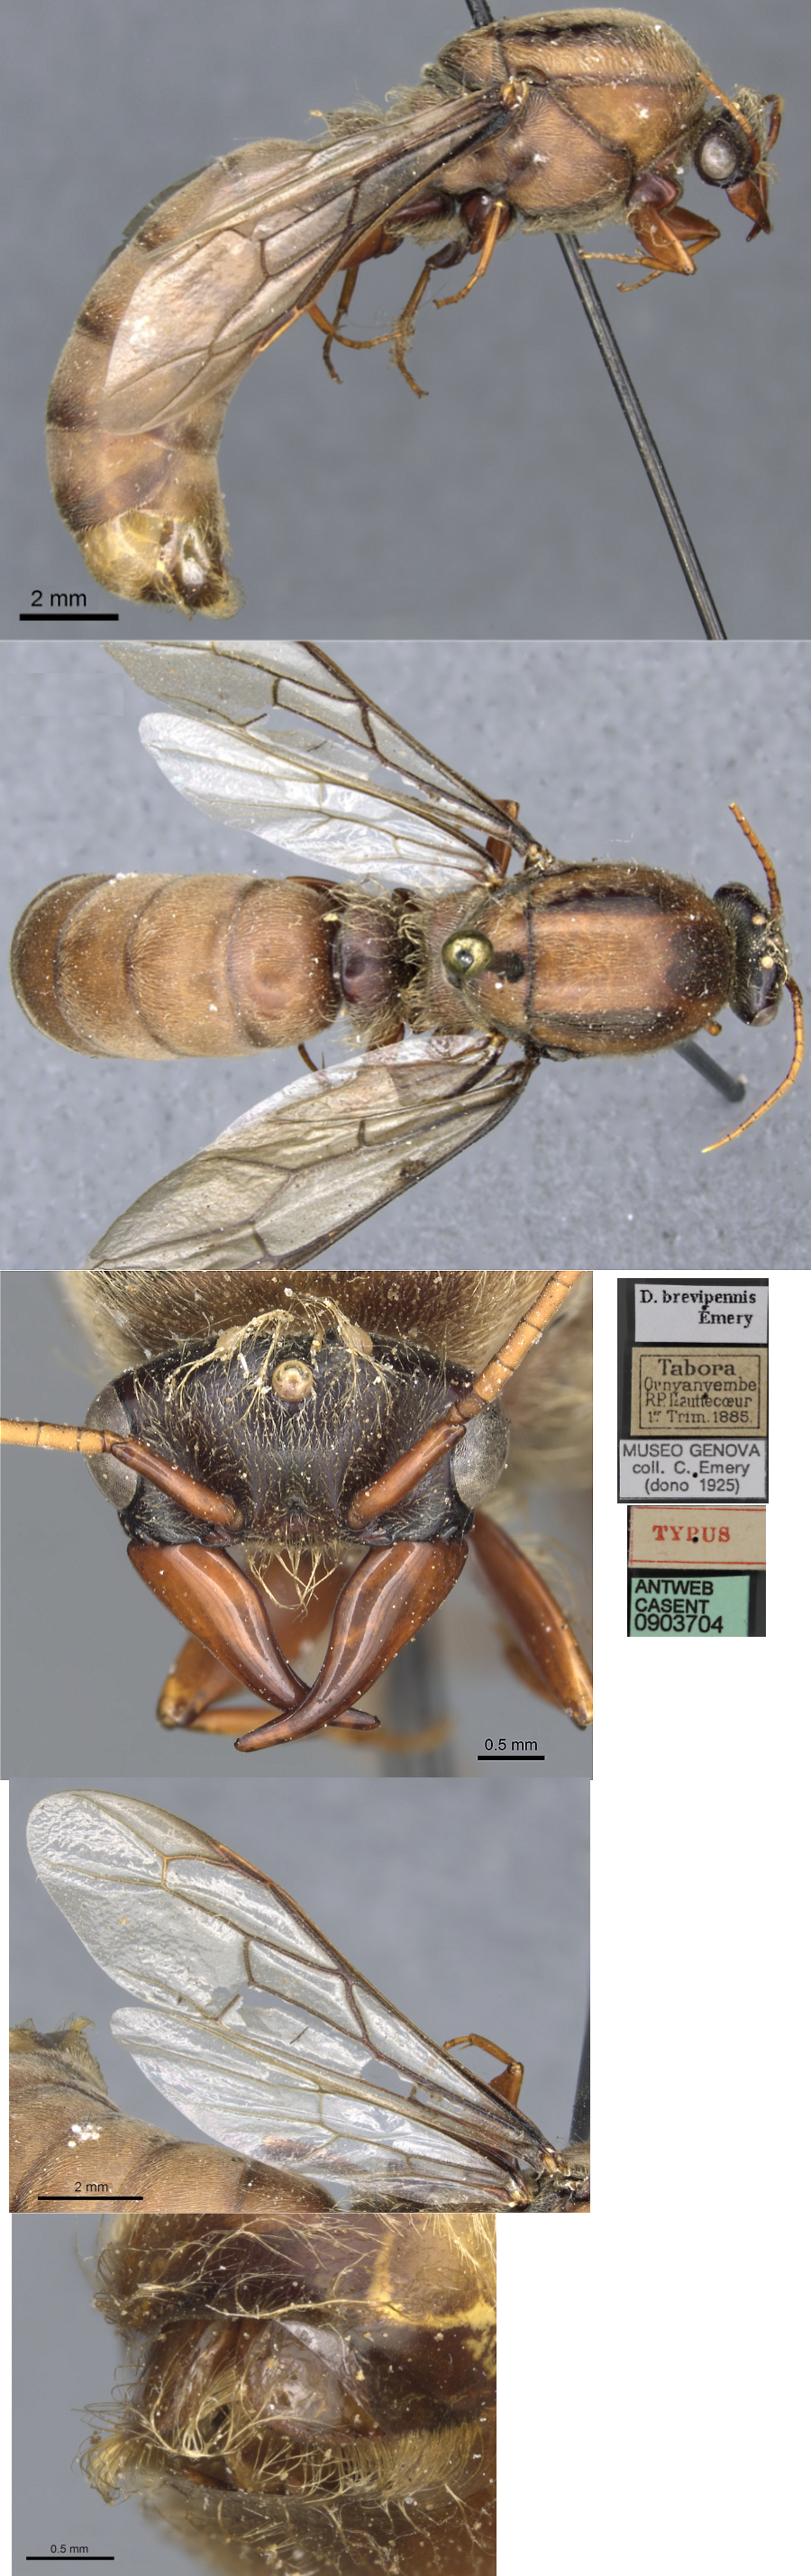 Dorylus brevipennis male